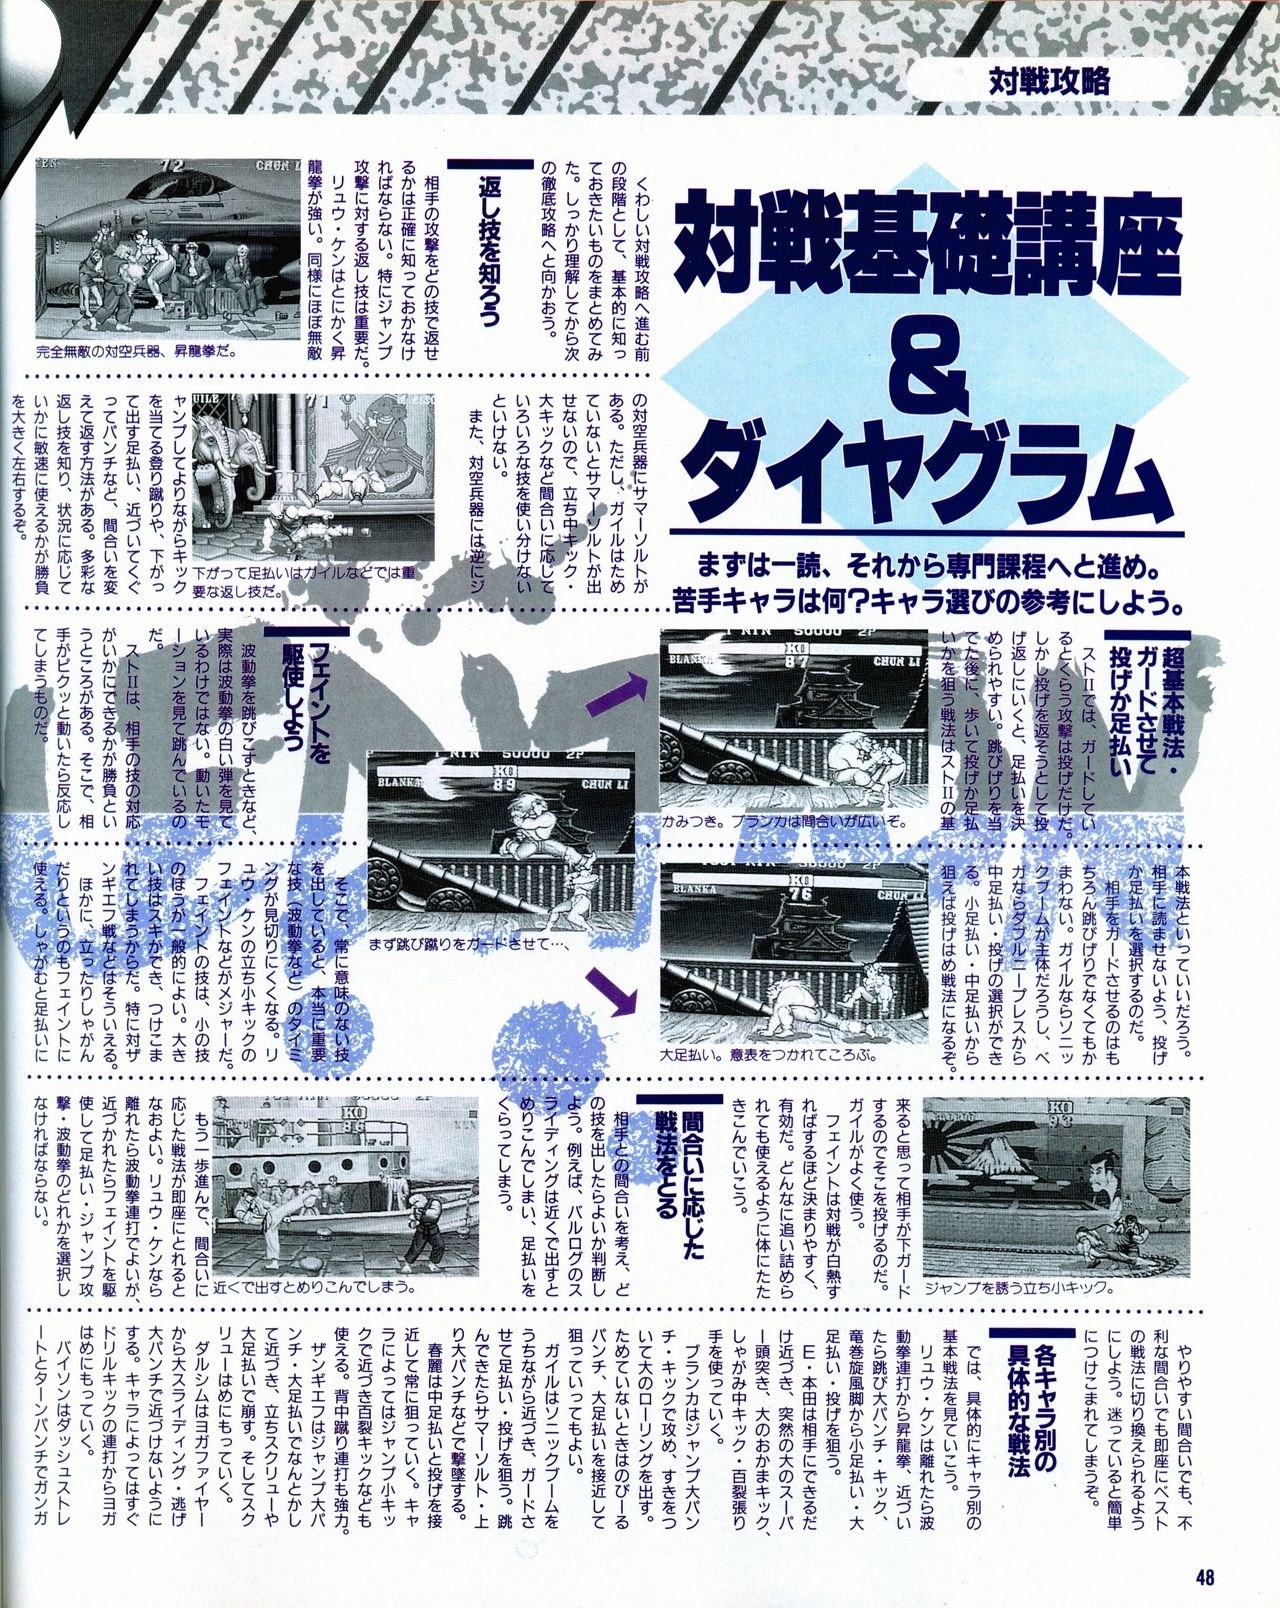 Street Fighter II Dash - Gamest special issue 77 49